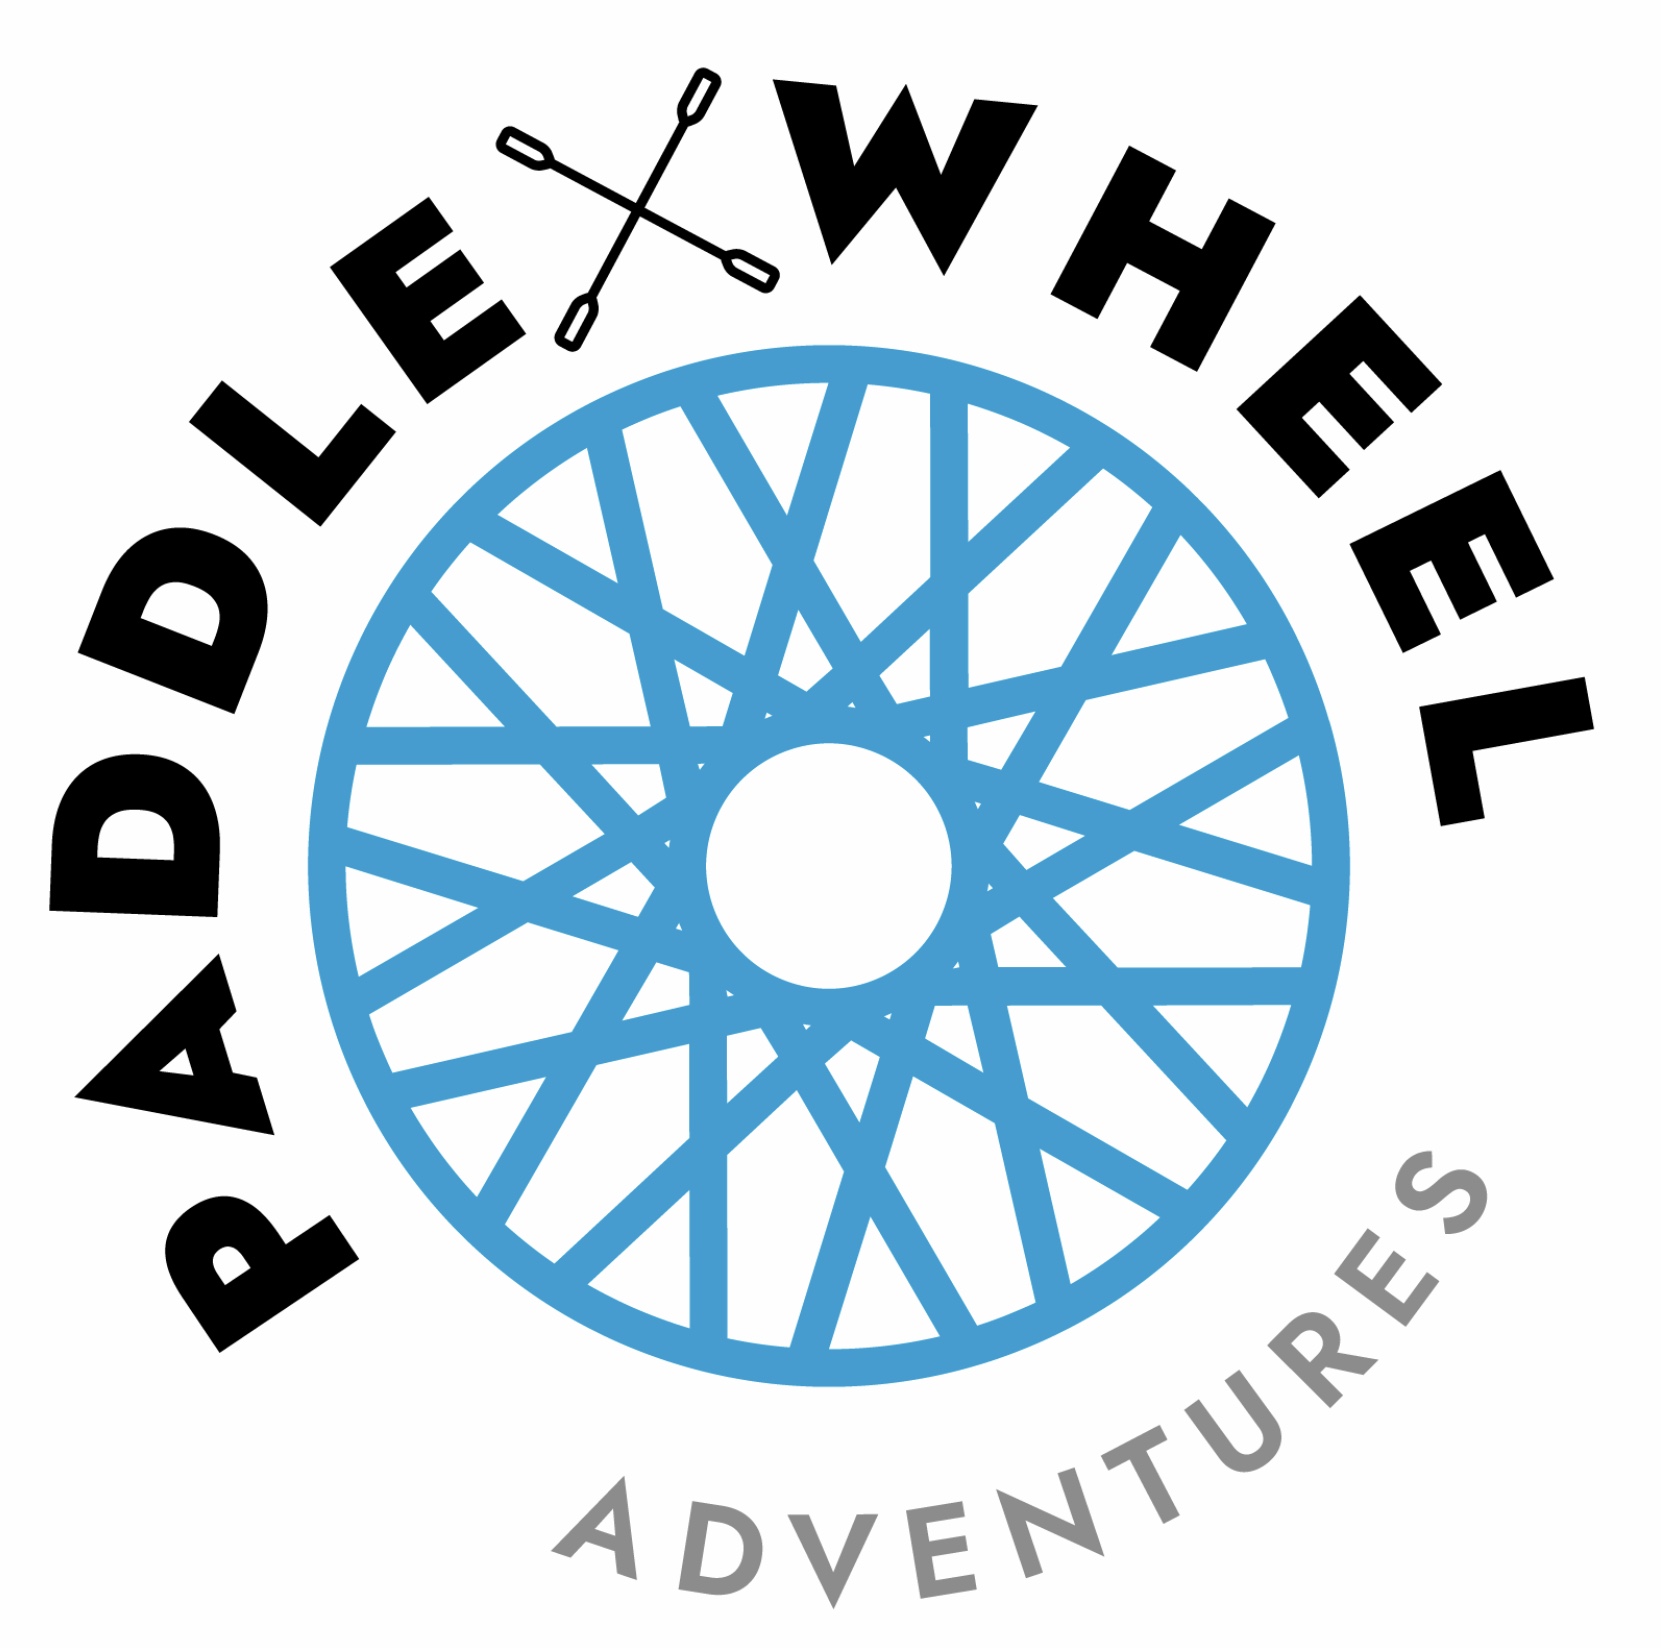 Paddle Wheel Adventures Ltd.